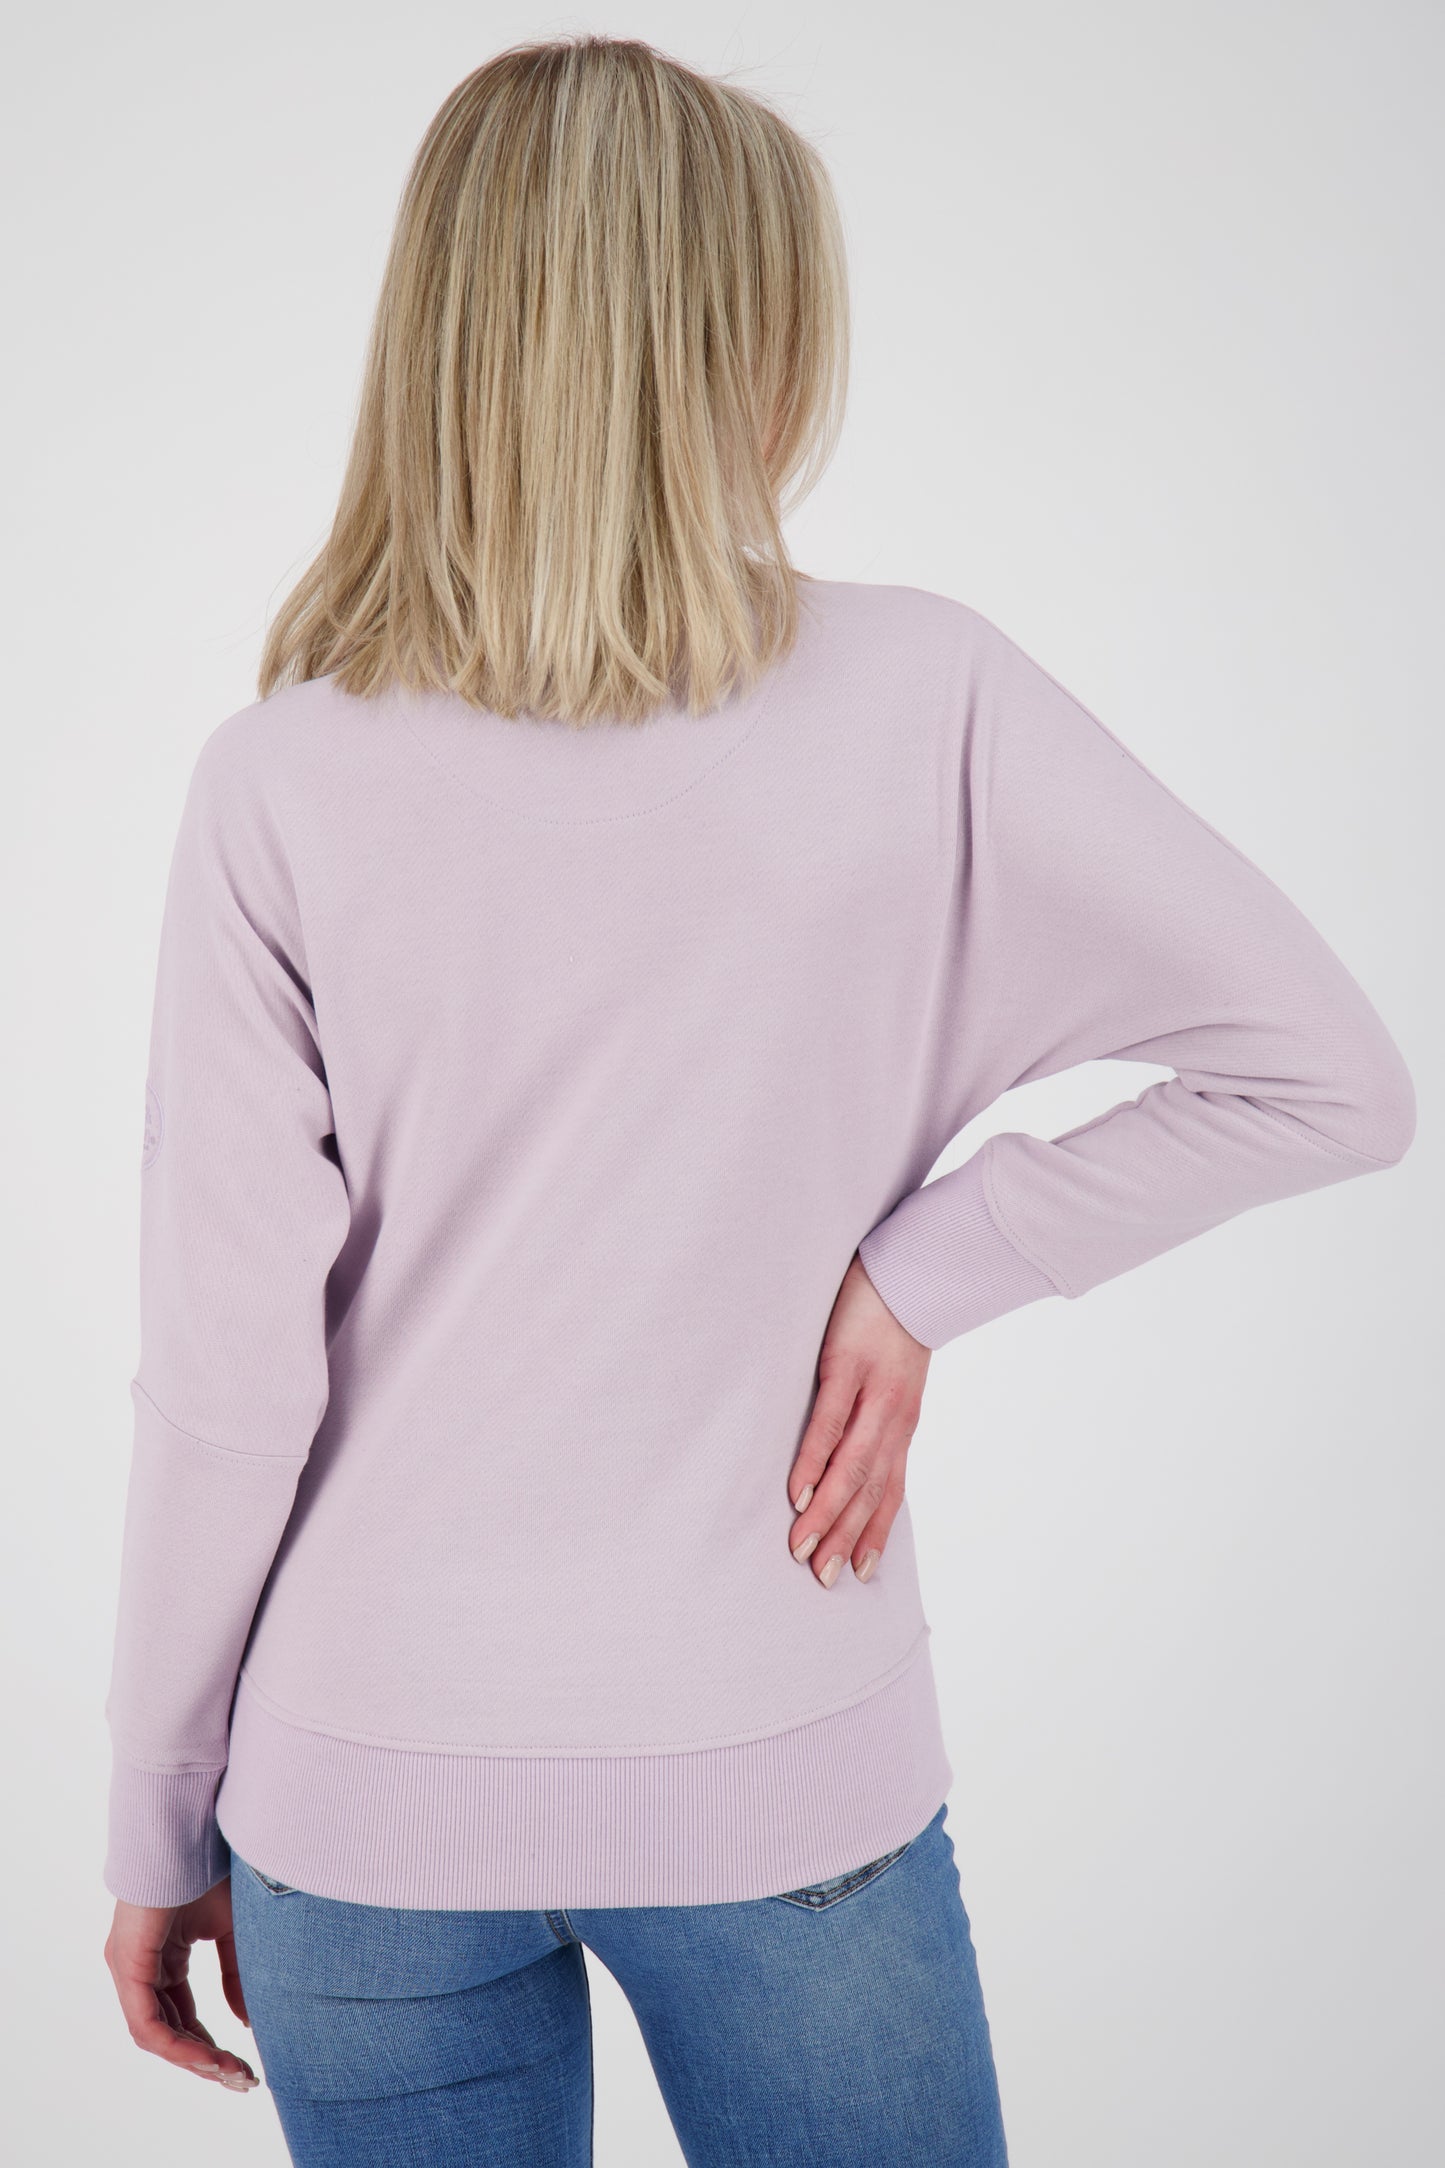 DalaAK A Damen Sweater-Lässig, farbenfroh, perfekt für den Alltag Violett